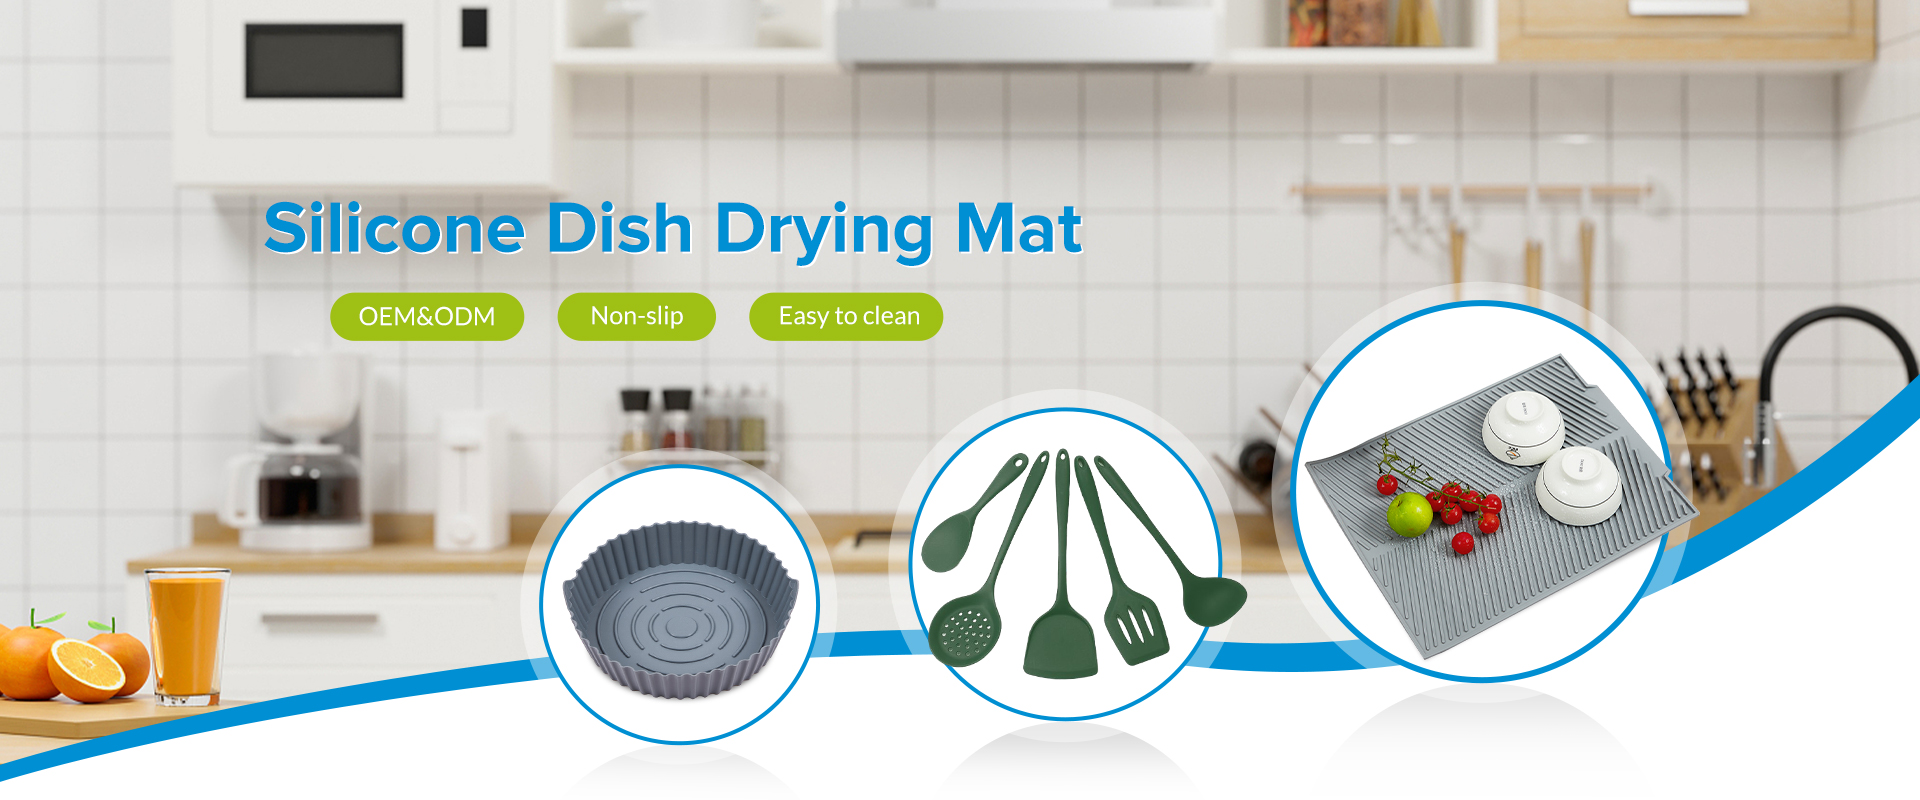 Silicone Dish Drying Mat